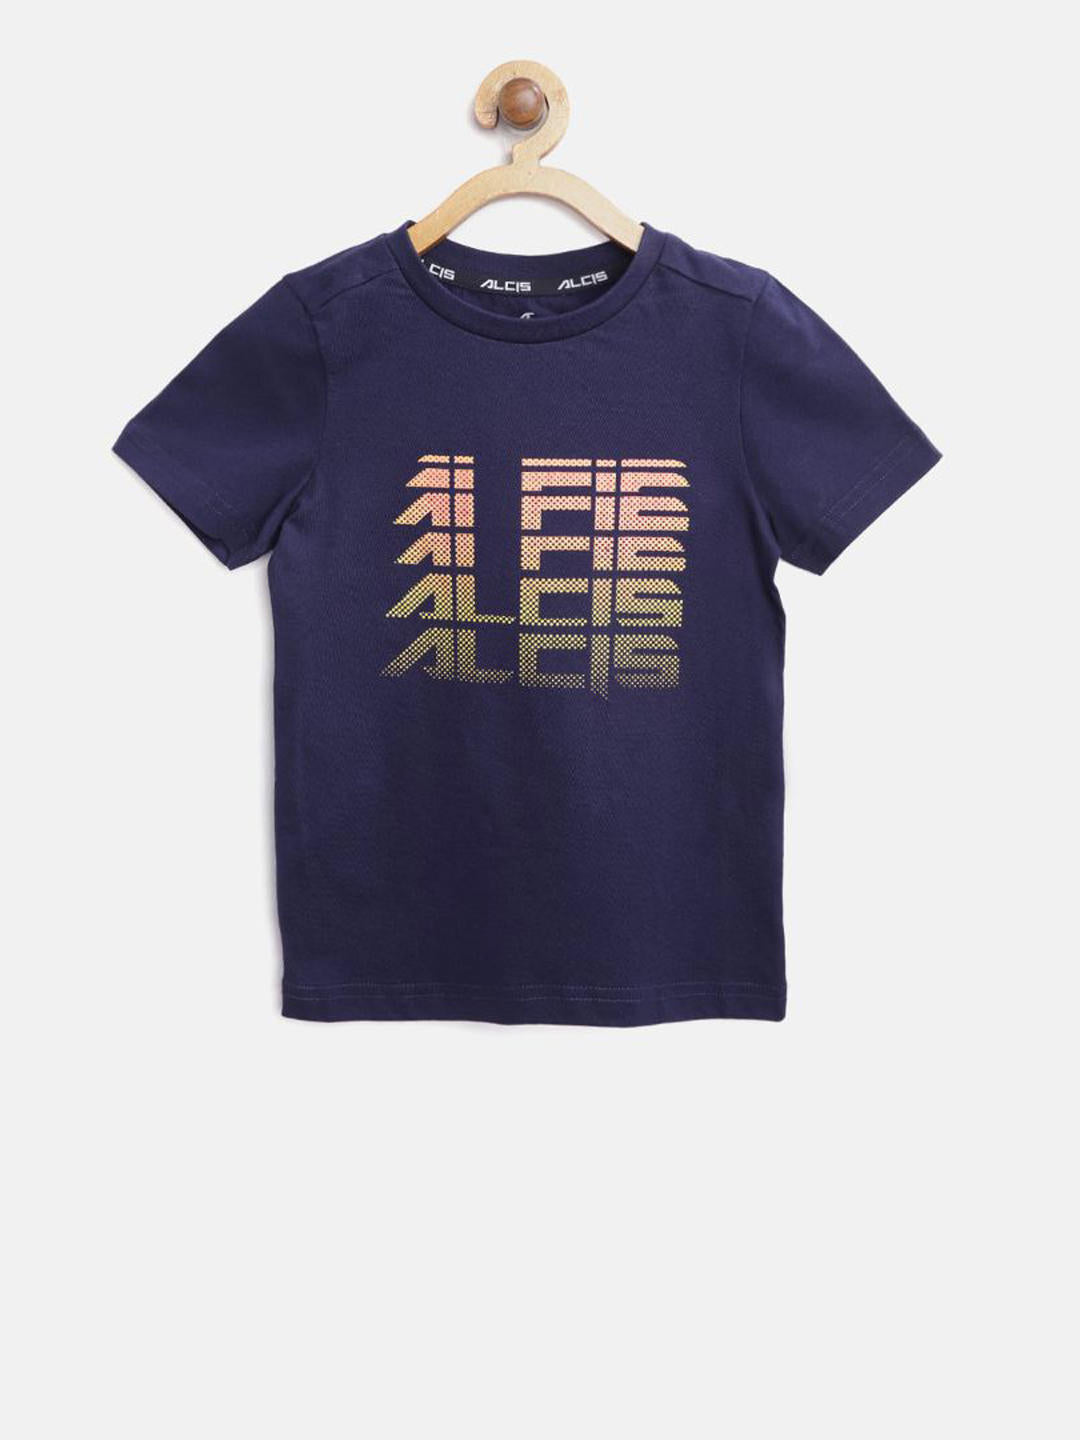 Alcis Boys Navy Blue Printed Round Neck Training T-shirt BTE750B6-4